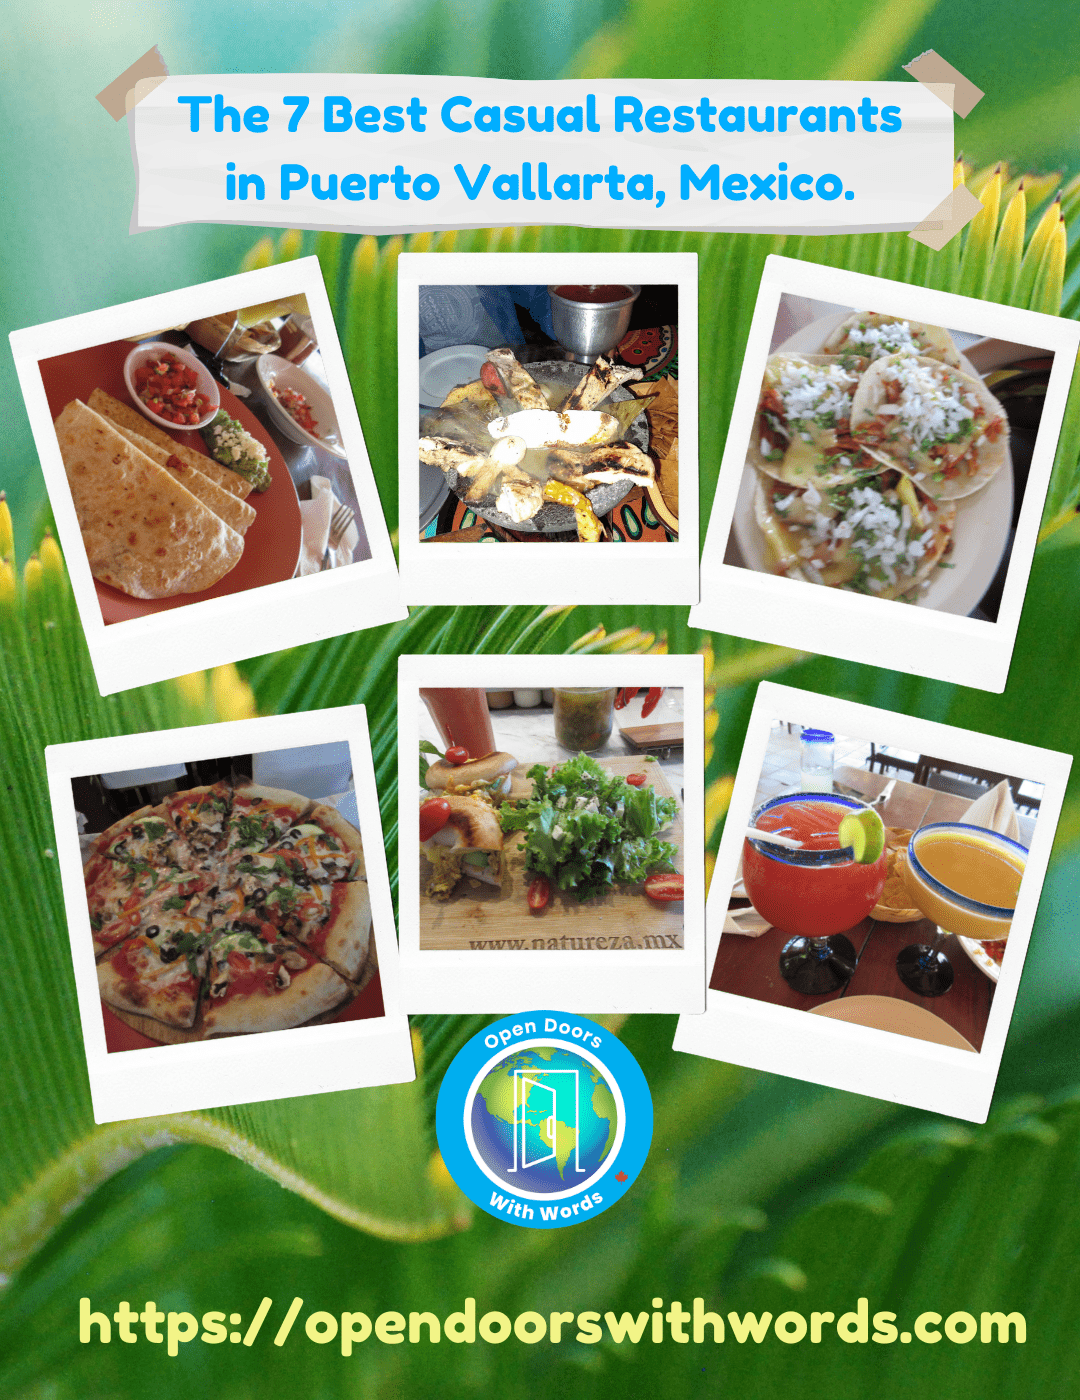 The 7 Best Casual Restaurants in Puerto Vallarta, Mexico